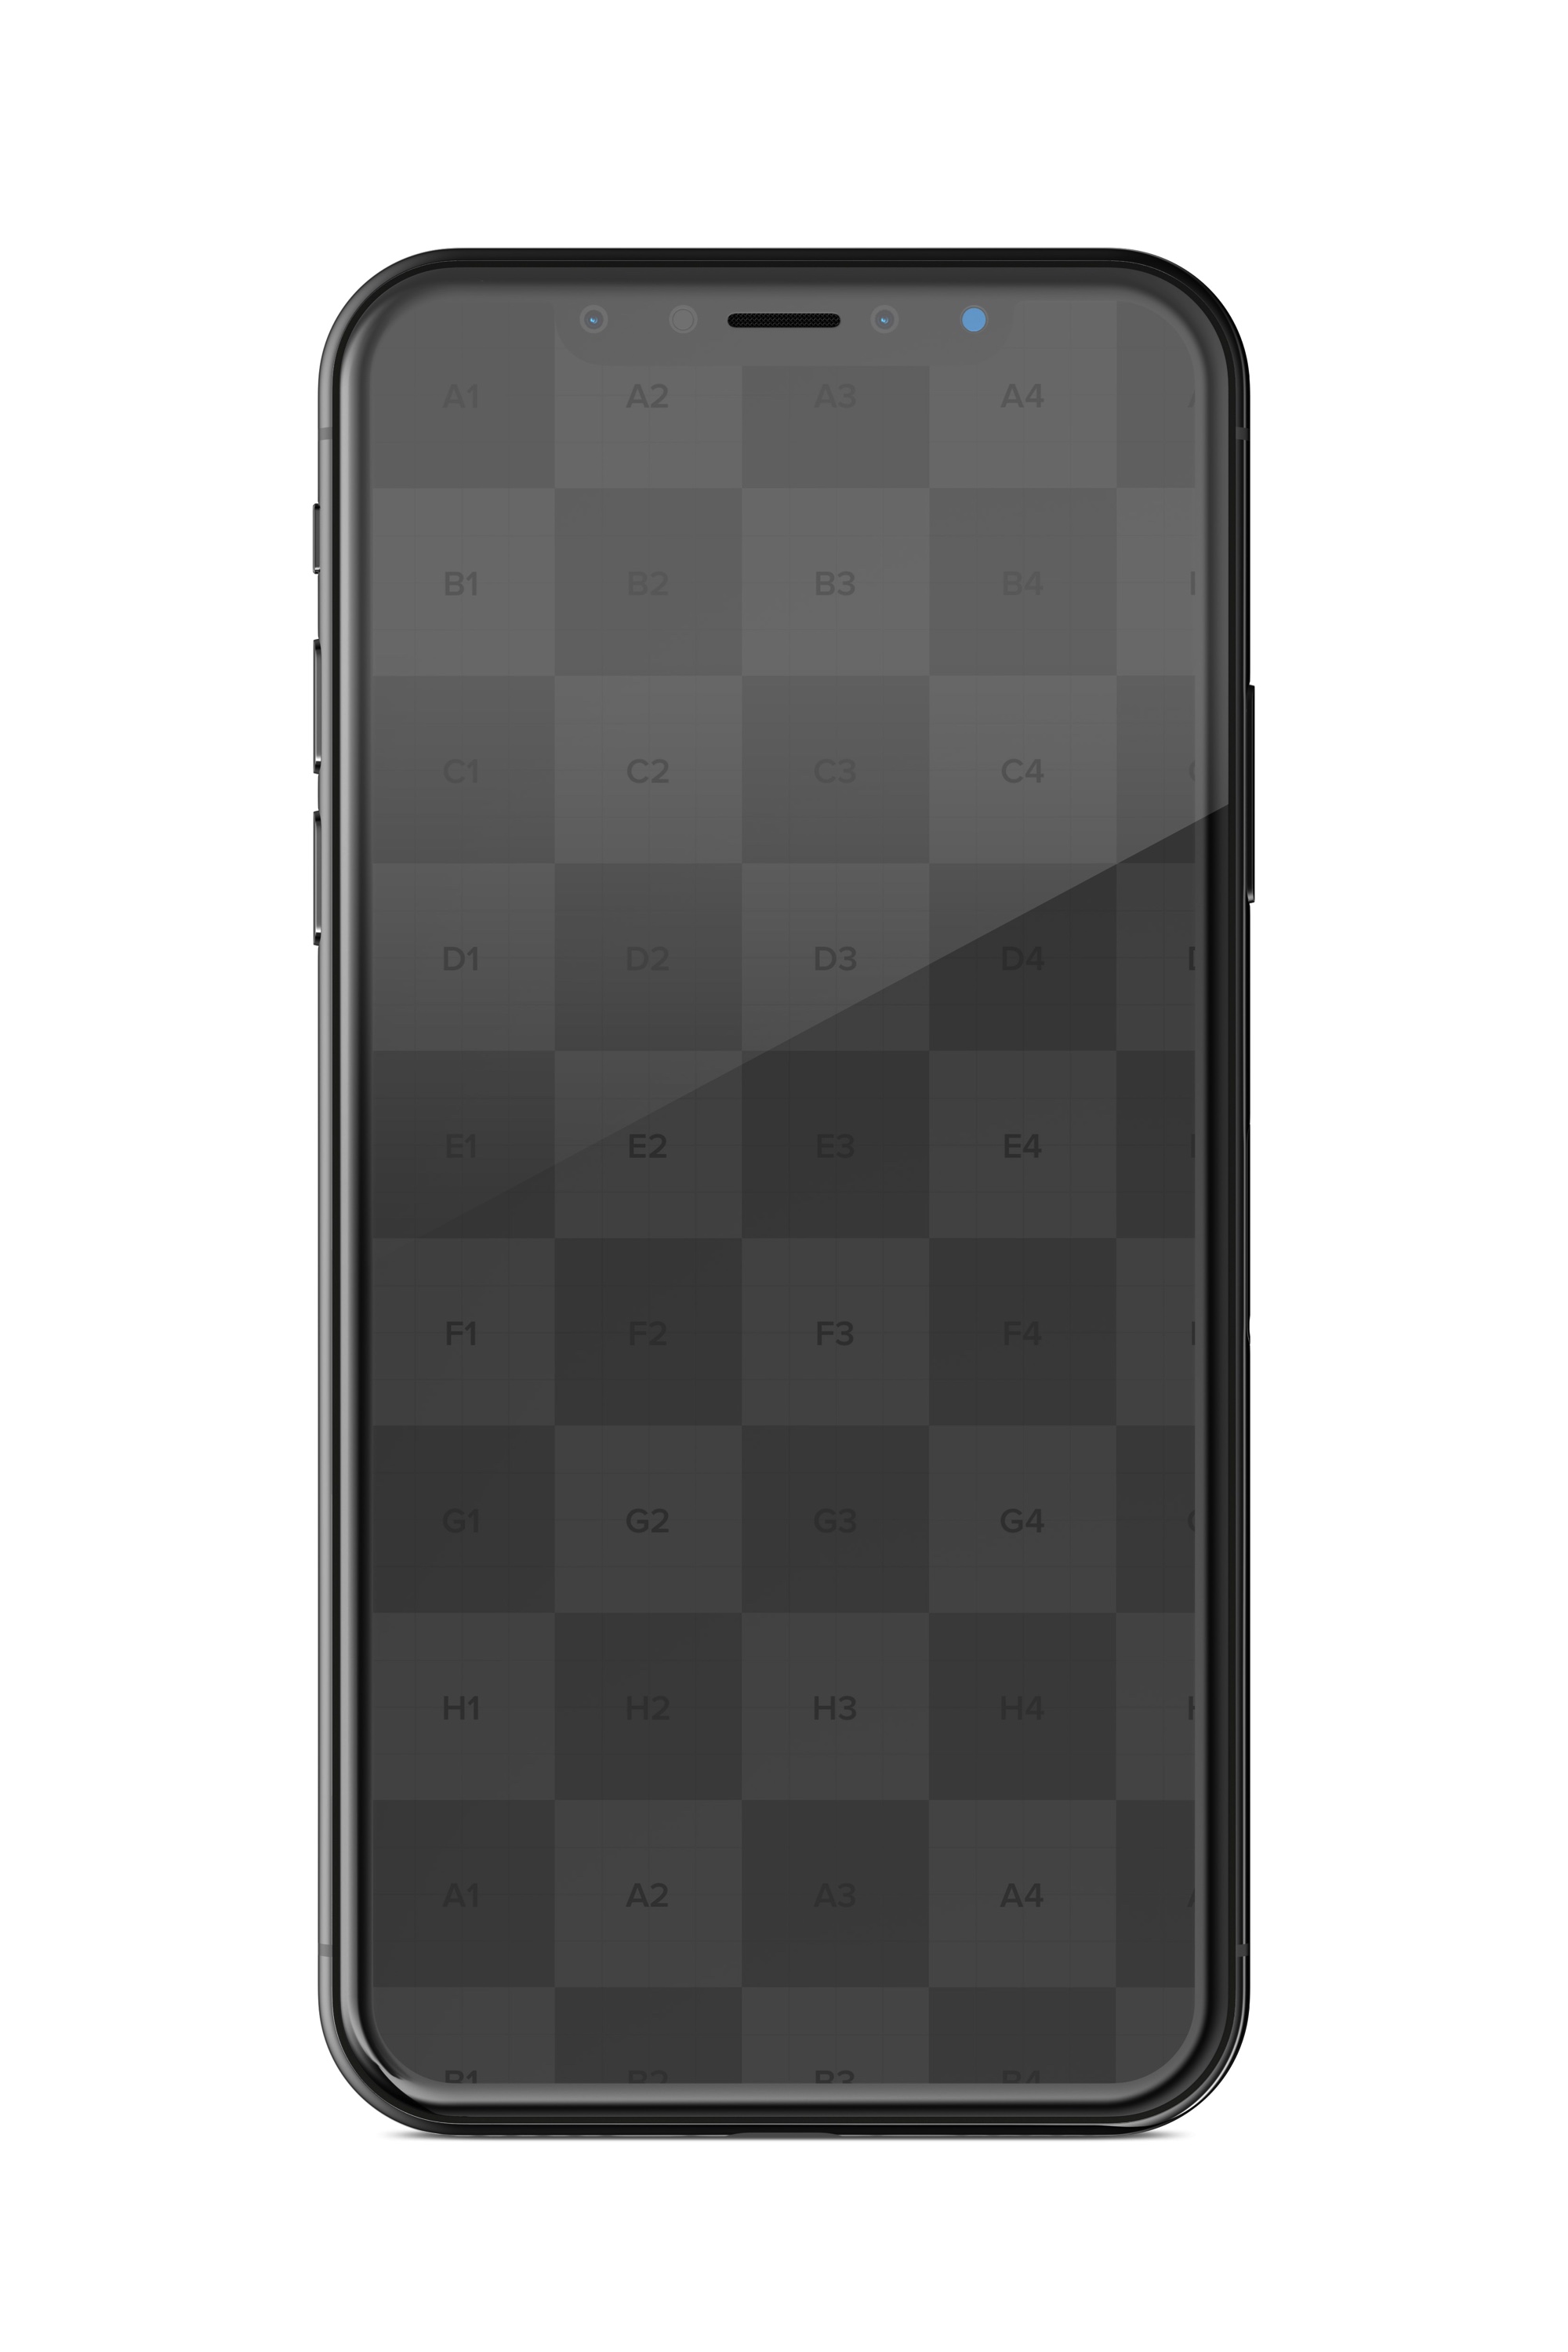 iPhone X智能手机UI设计屏幕演示样机免费素材 Free iPhone X Mockup 01插图(7)